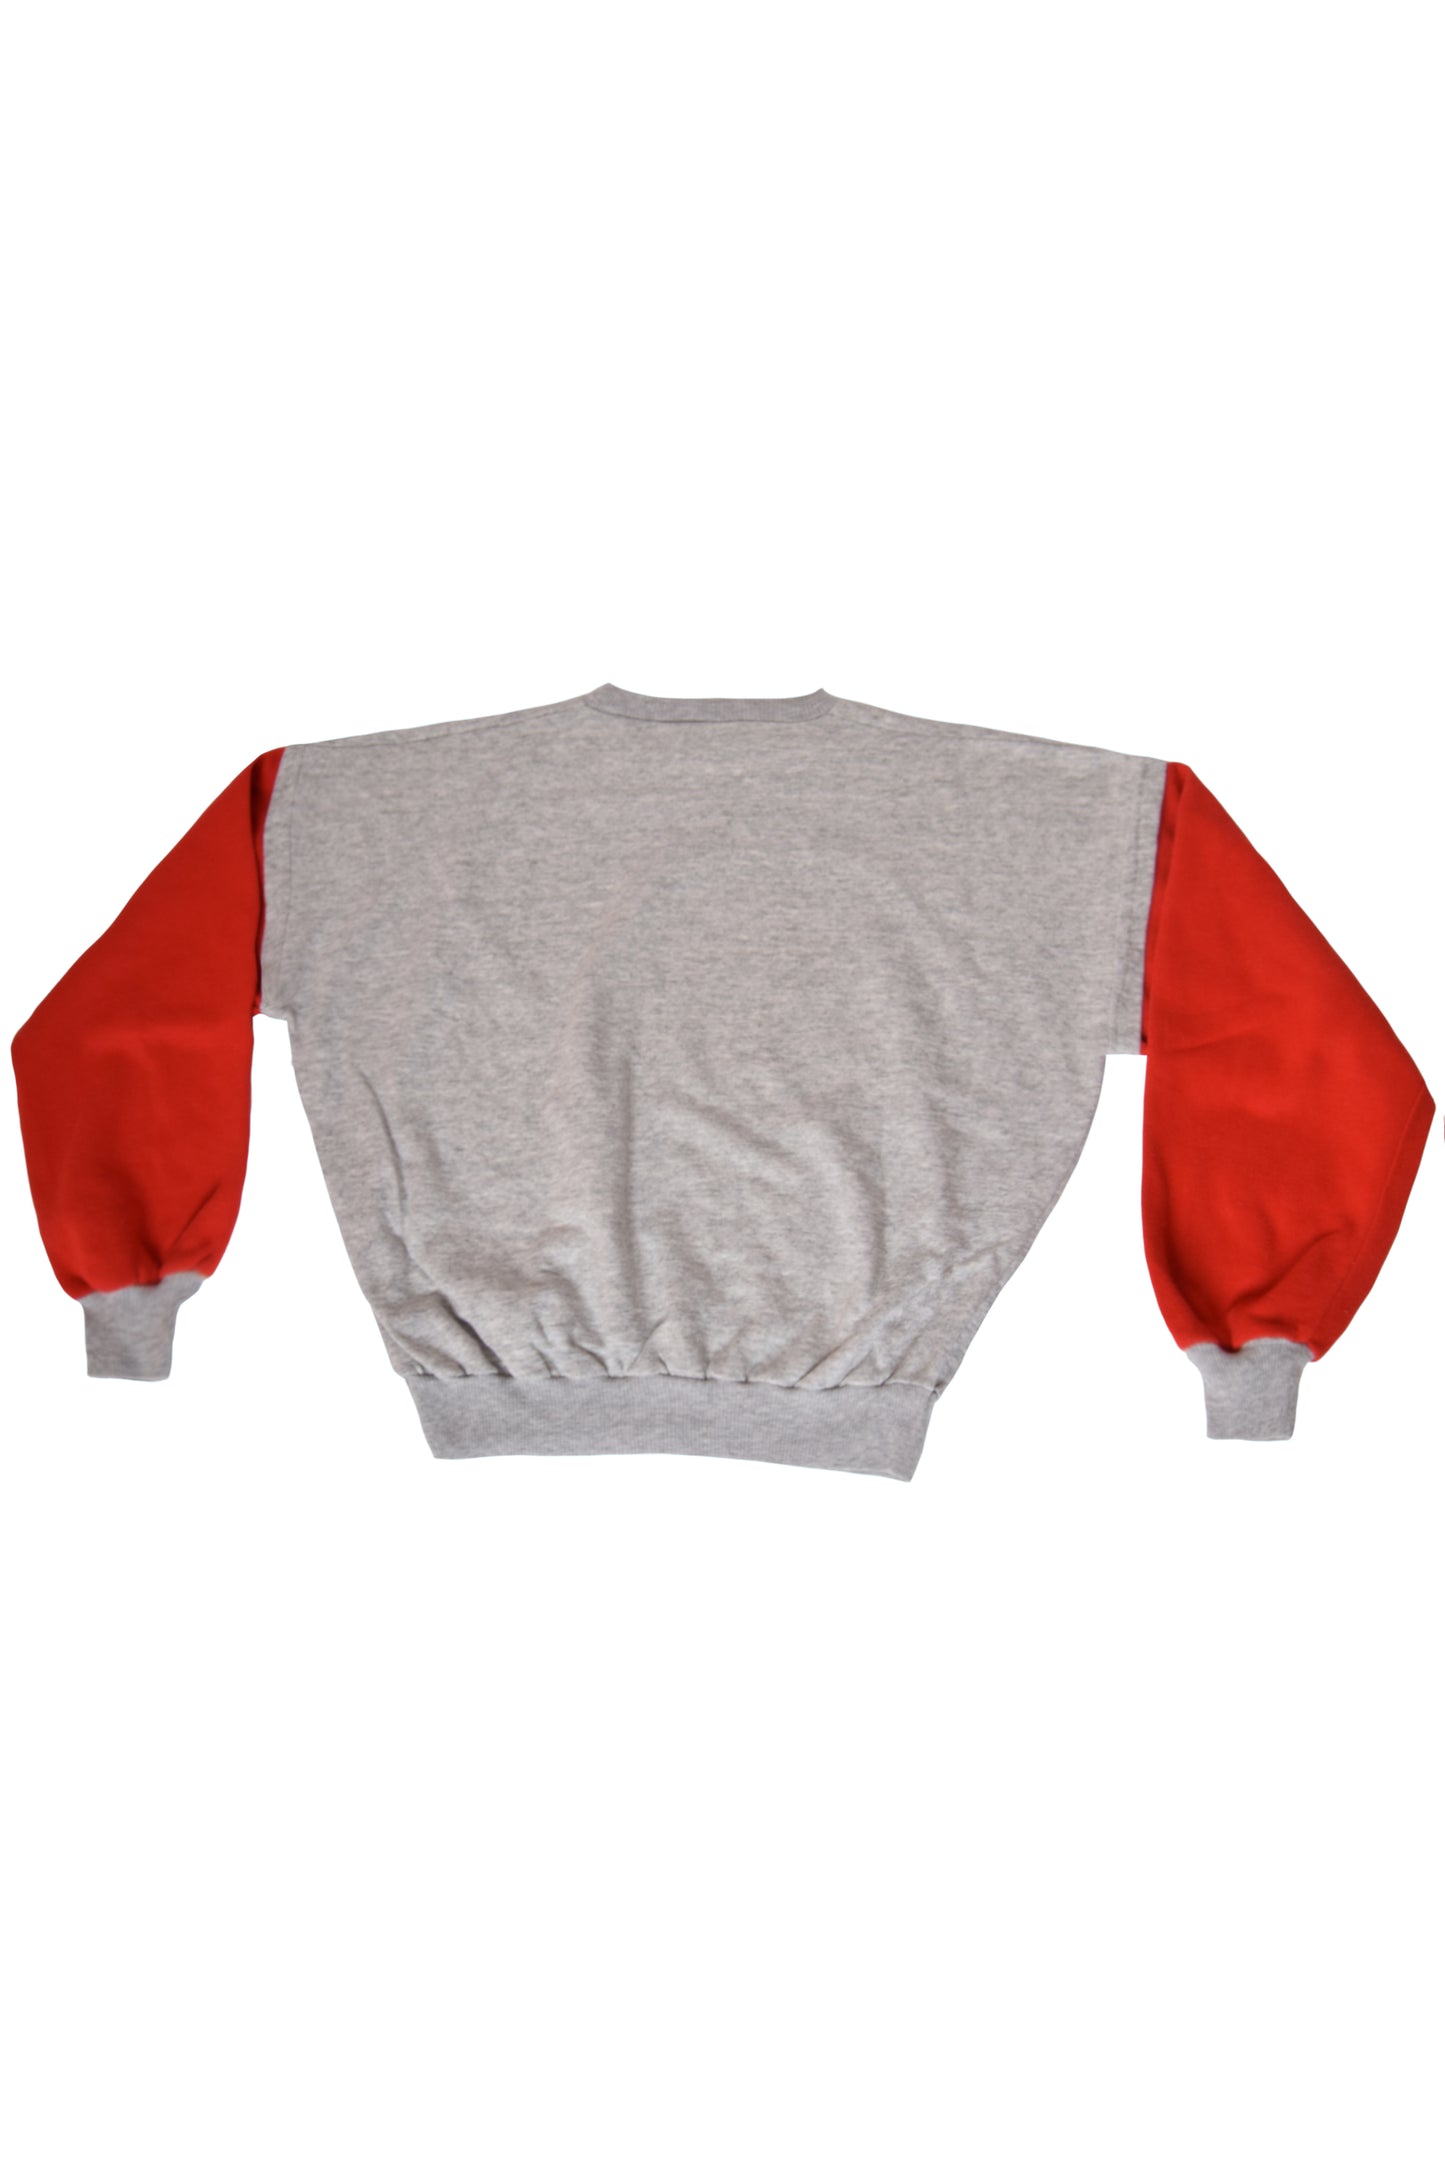 Vintage Puma Sweatshirt Crew Neck Size L-XL Grey Red